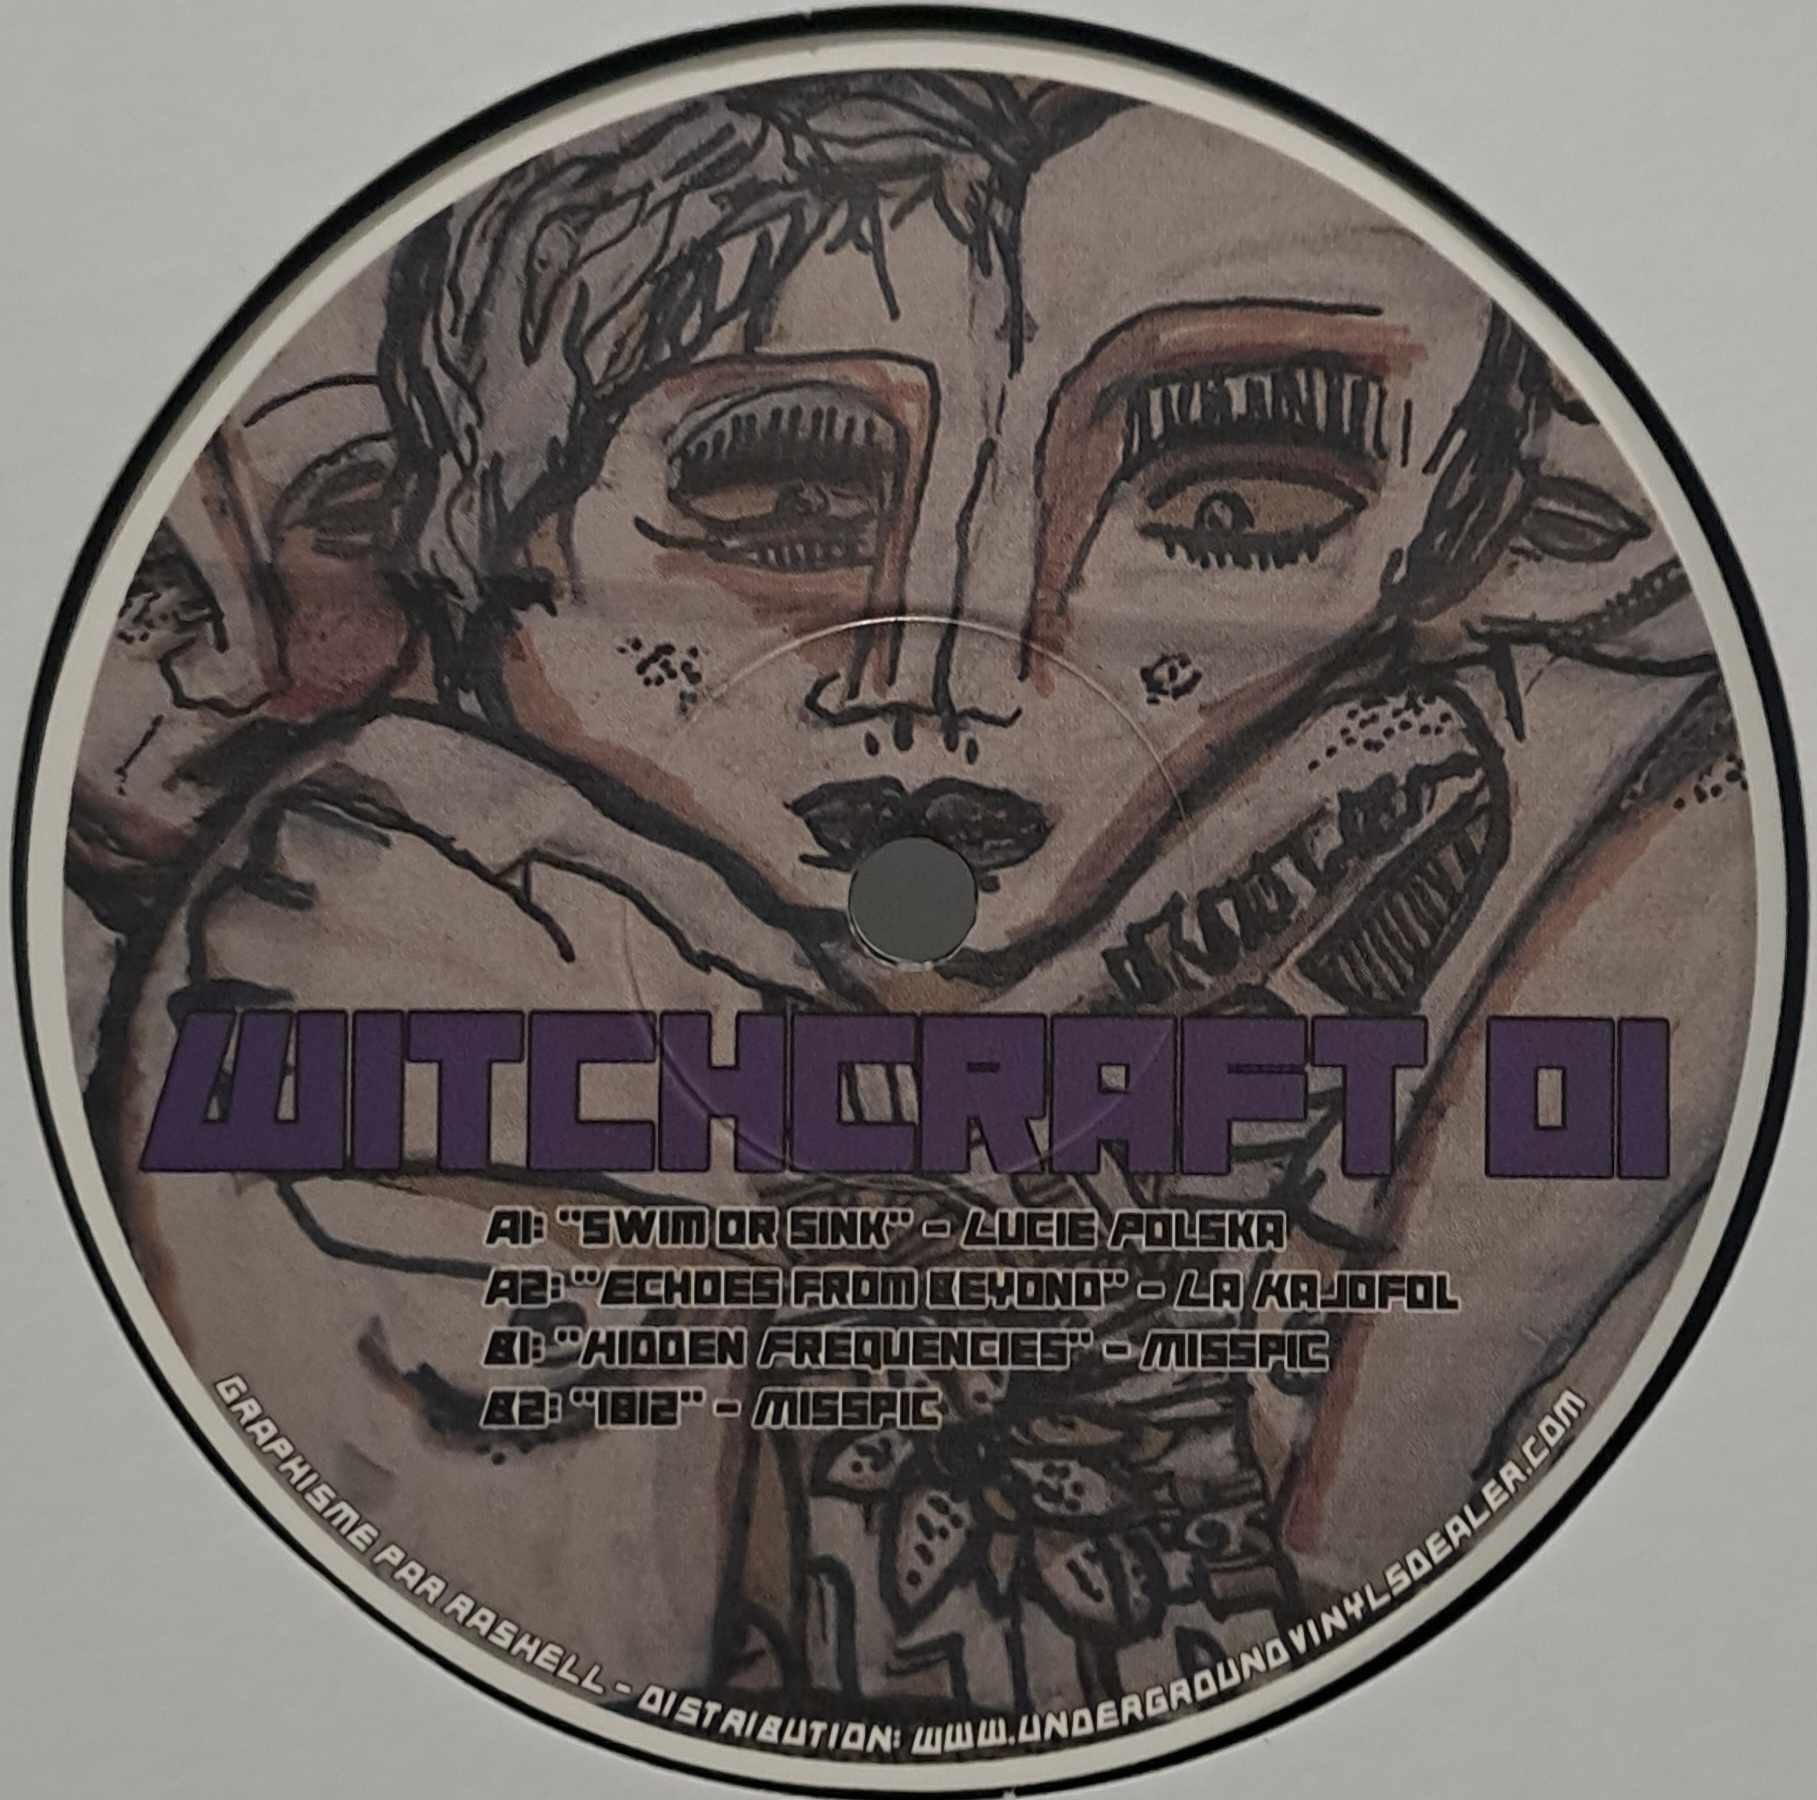 Witchcraft 01 - vinyle acid